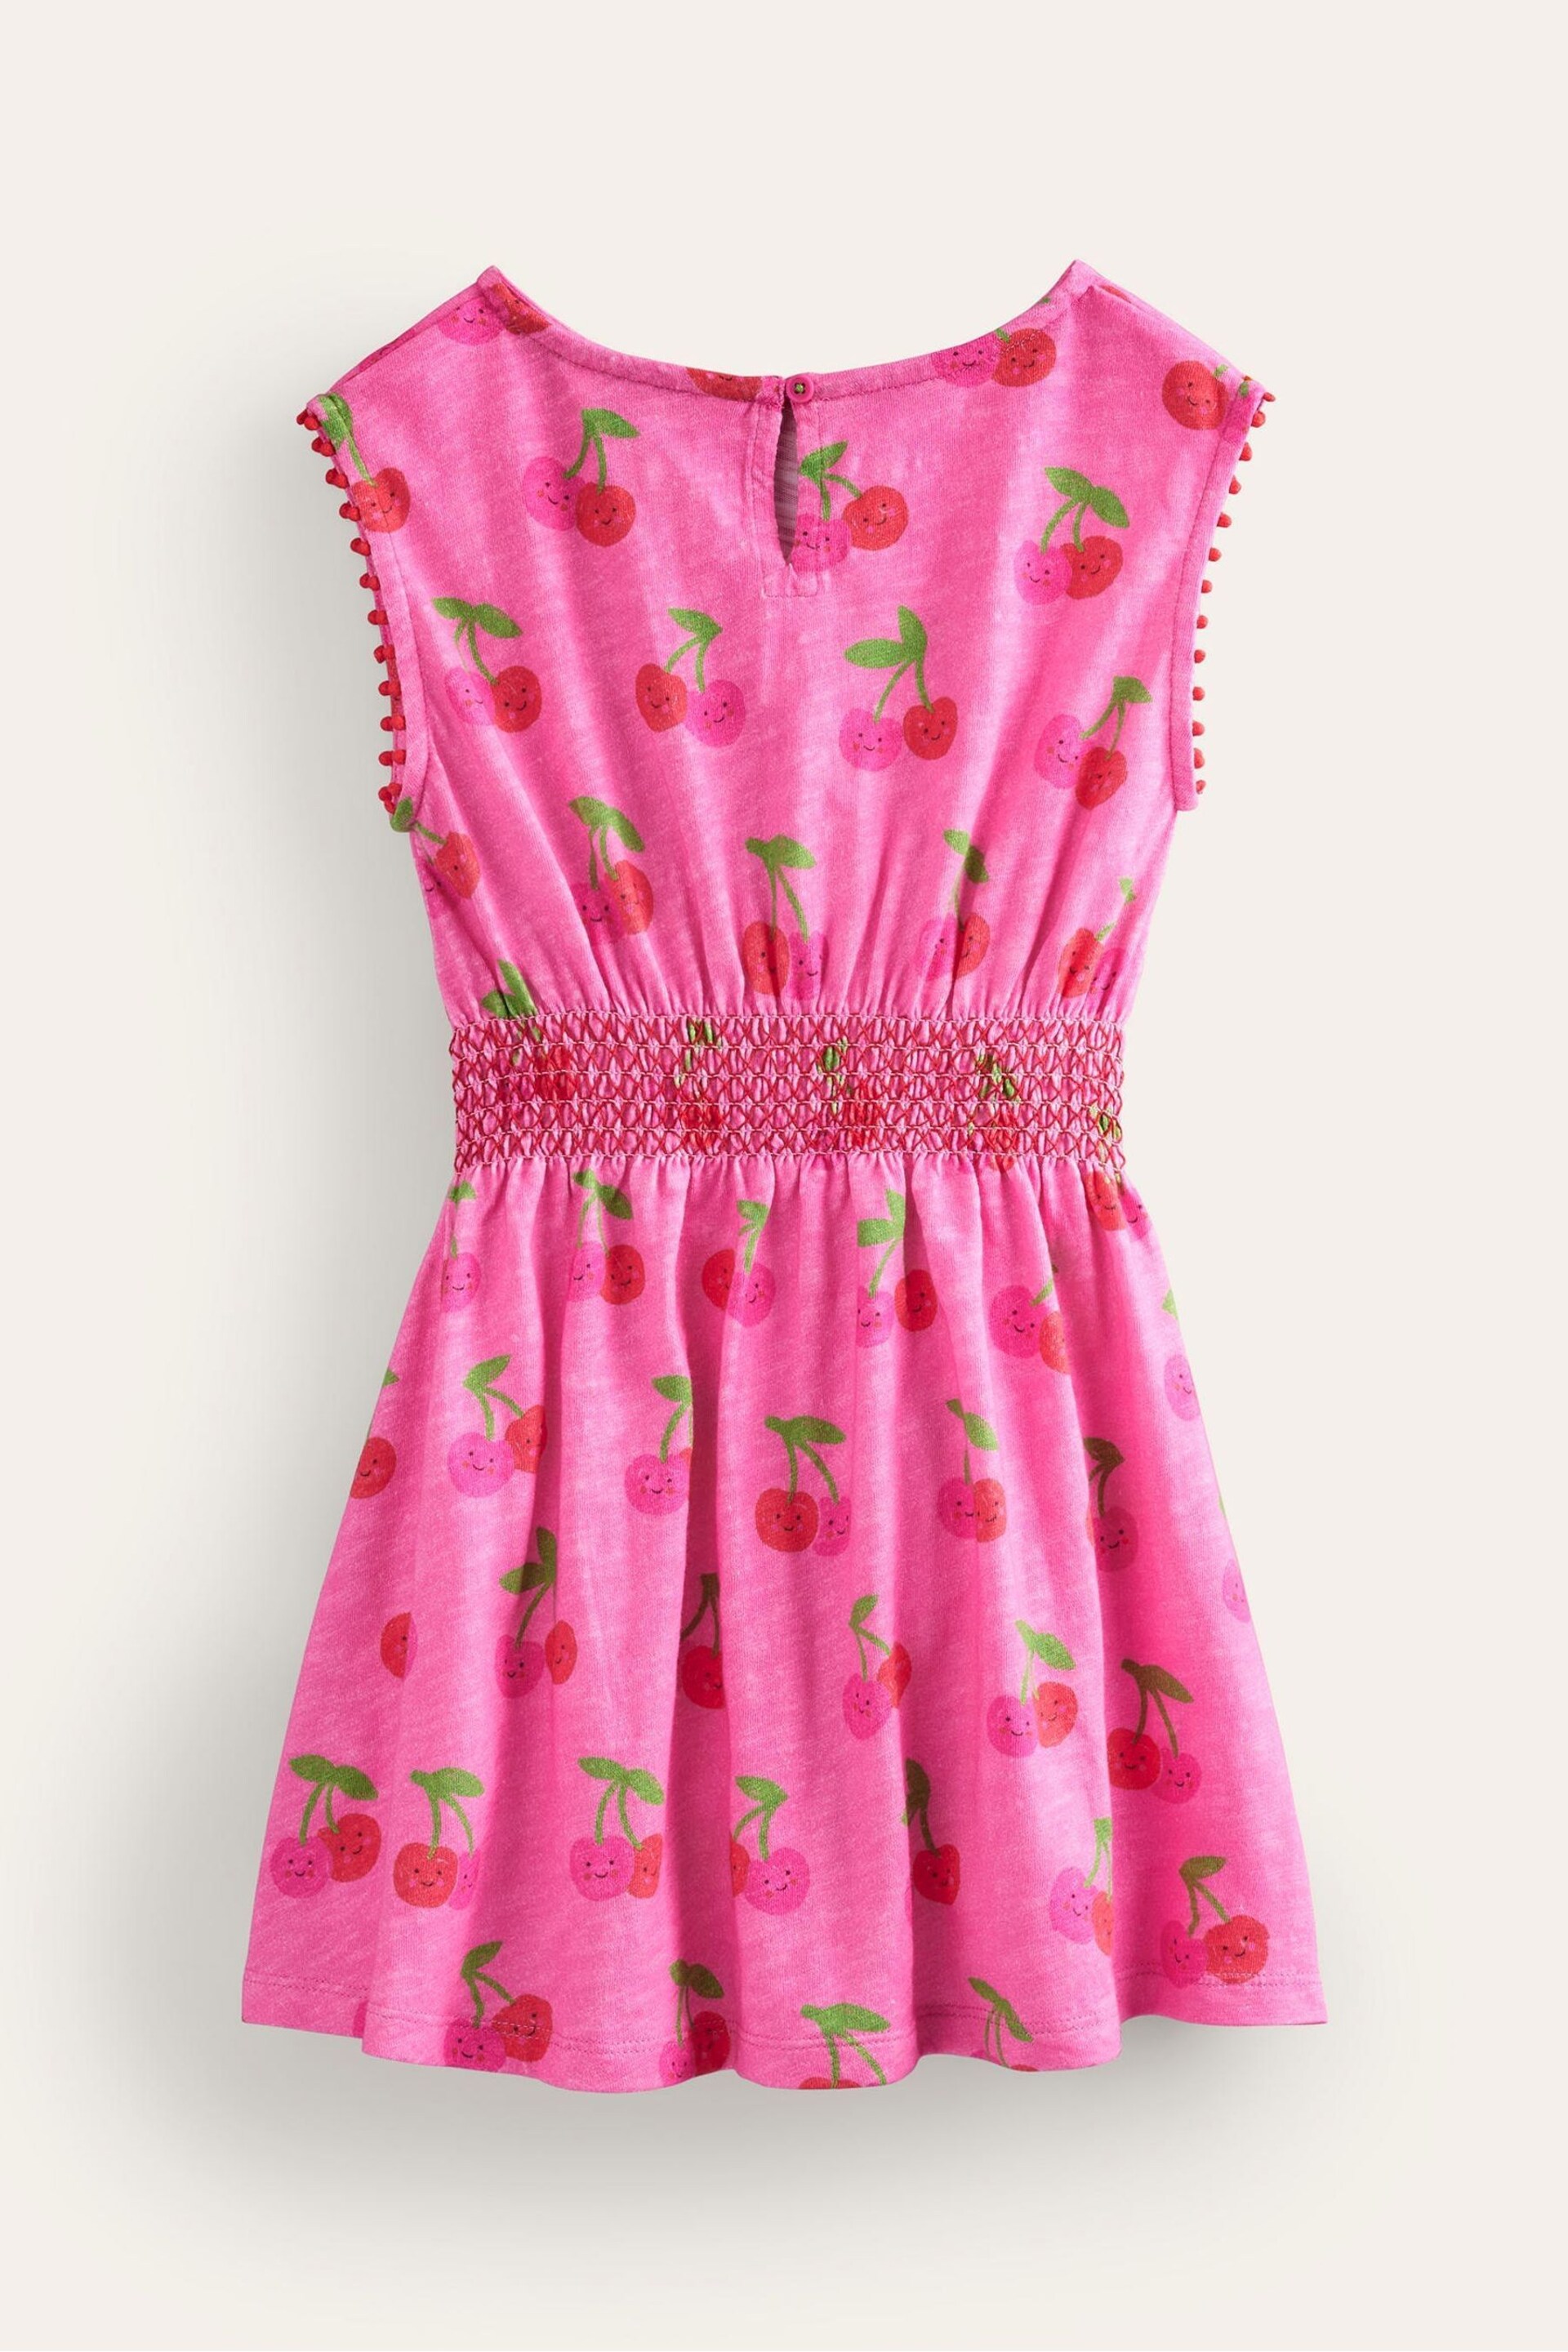 Boden Pink Shirred Waist Jersey Dress - Image 2 of 3